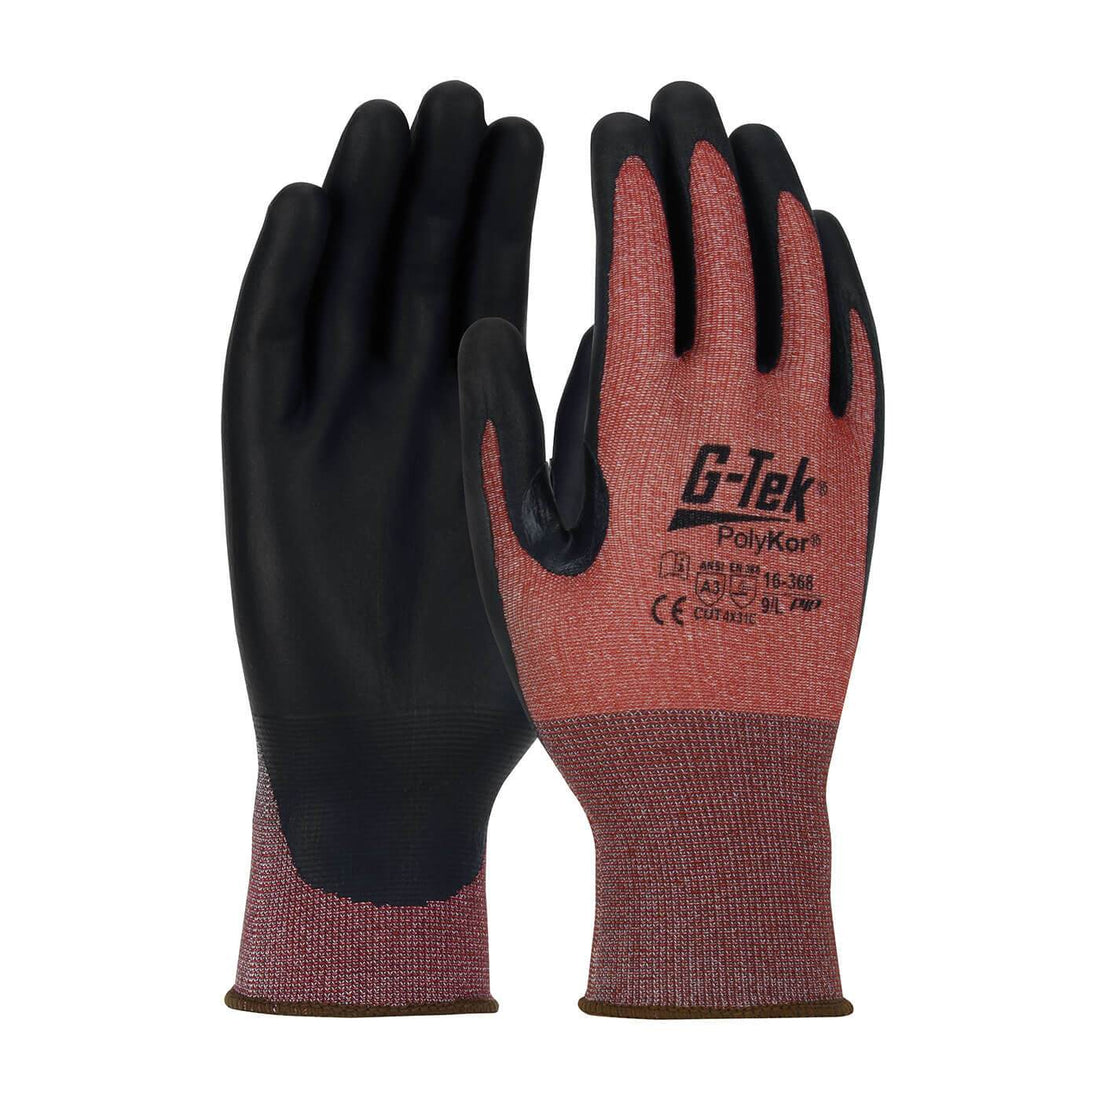 True Grip General Purpose Work Gloves, Touchscreen Compatible